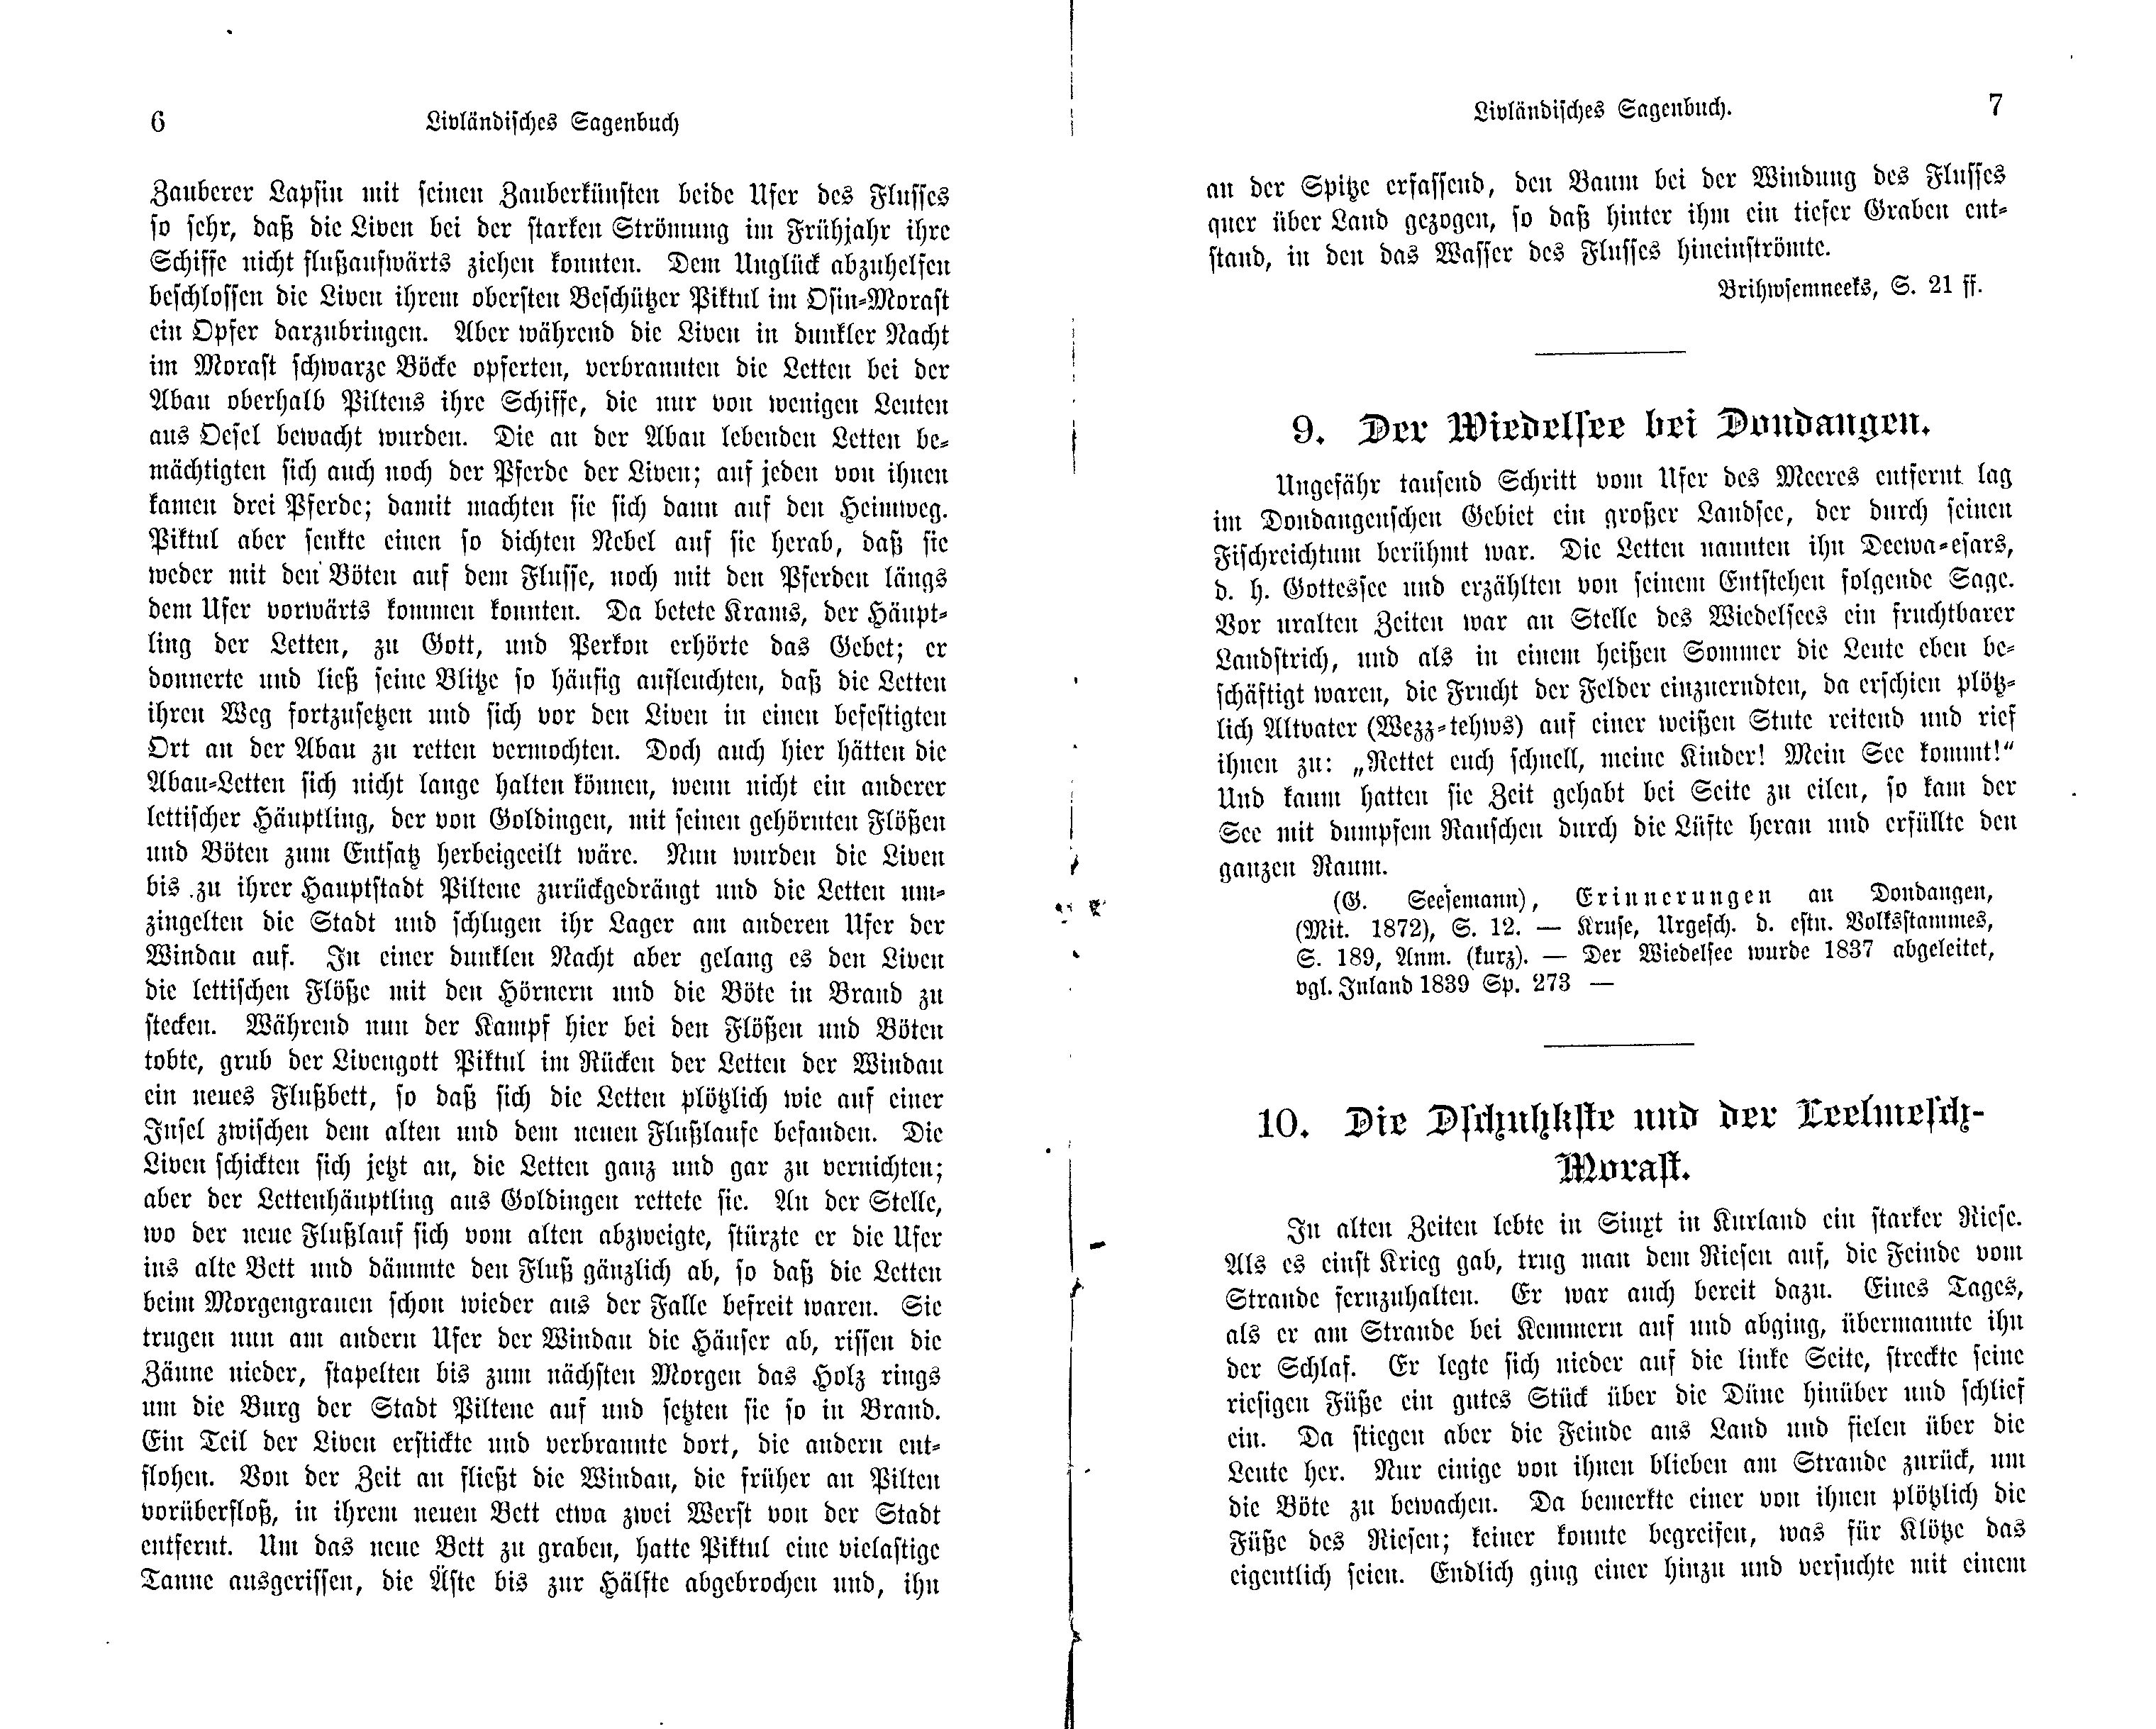 Der Wiedelsee bei Dondangen (1897) | 1. (6-7) Main body of text